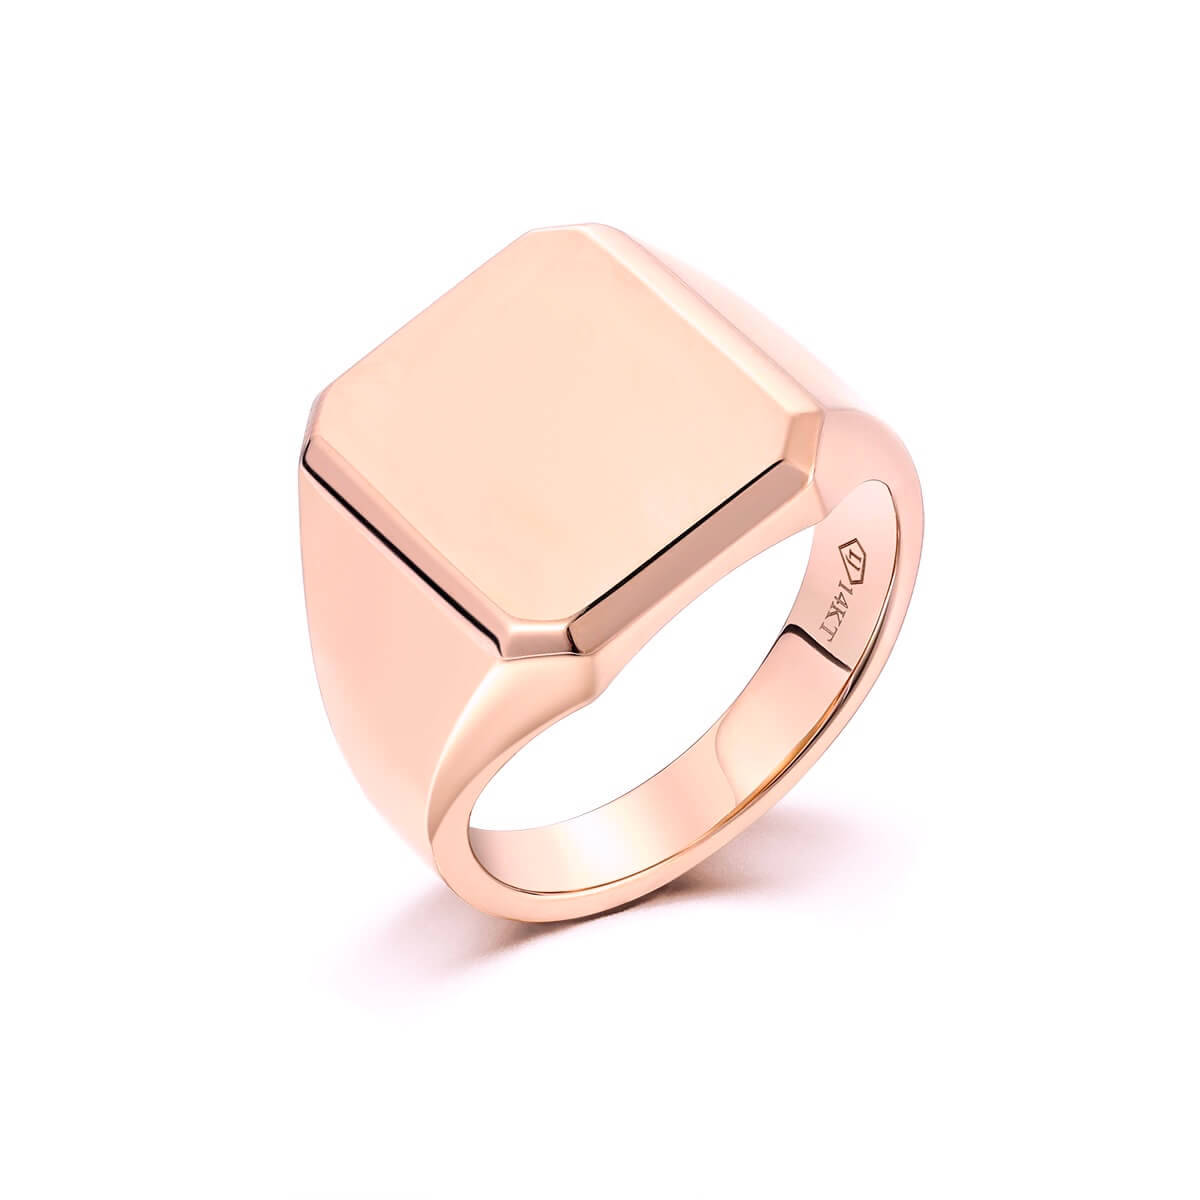 Signet Rings - Rings For Men & Women | Alighieri Jewellery